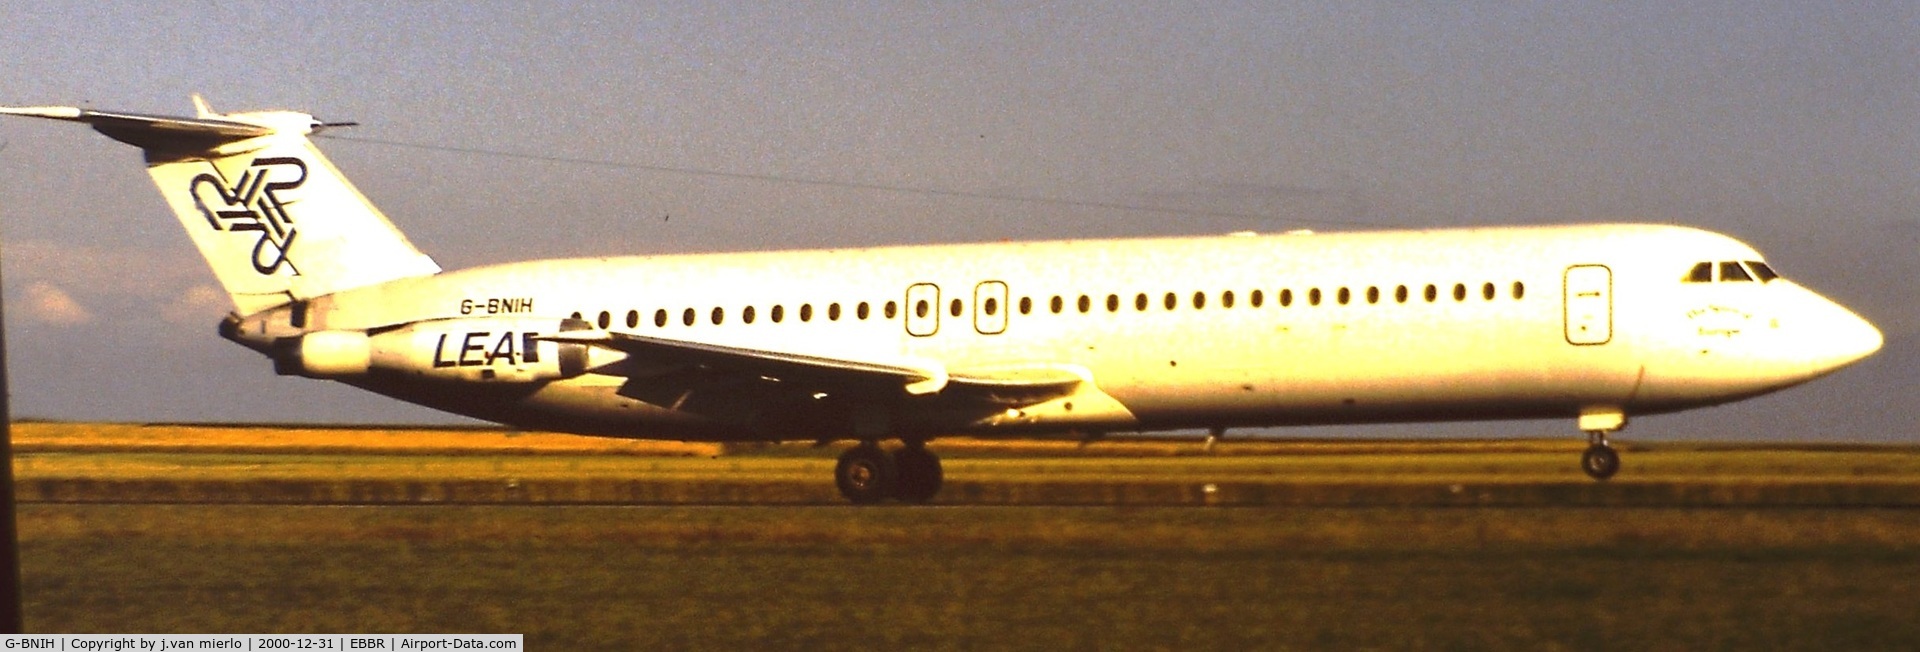 G-BNIH, 1986 Bucuresti Rombac 111-561RC One-Eleven C/N 406, Sunset landing 25L at brussels